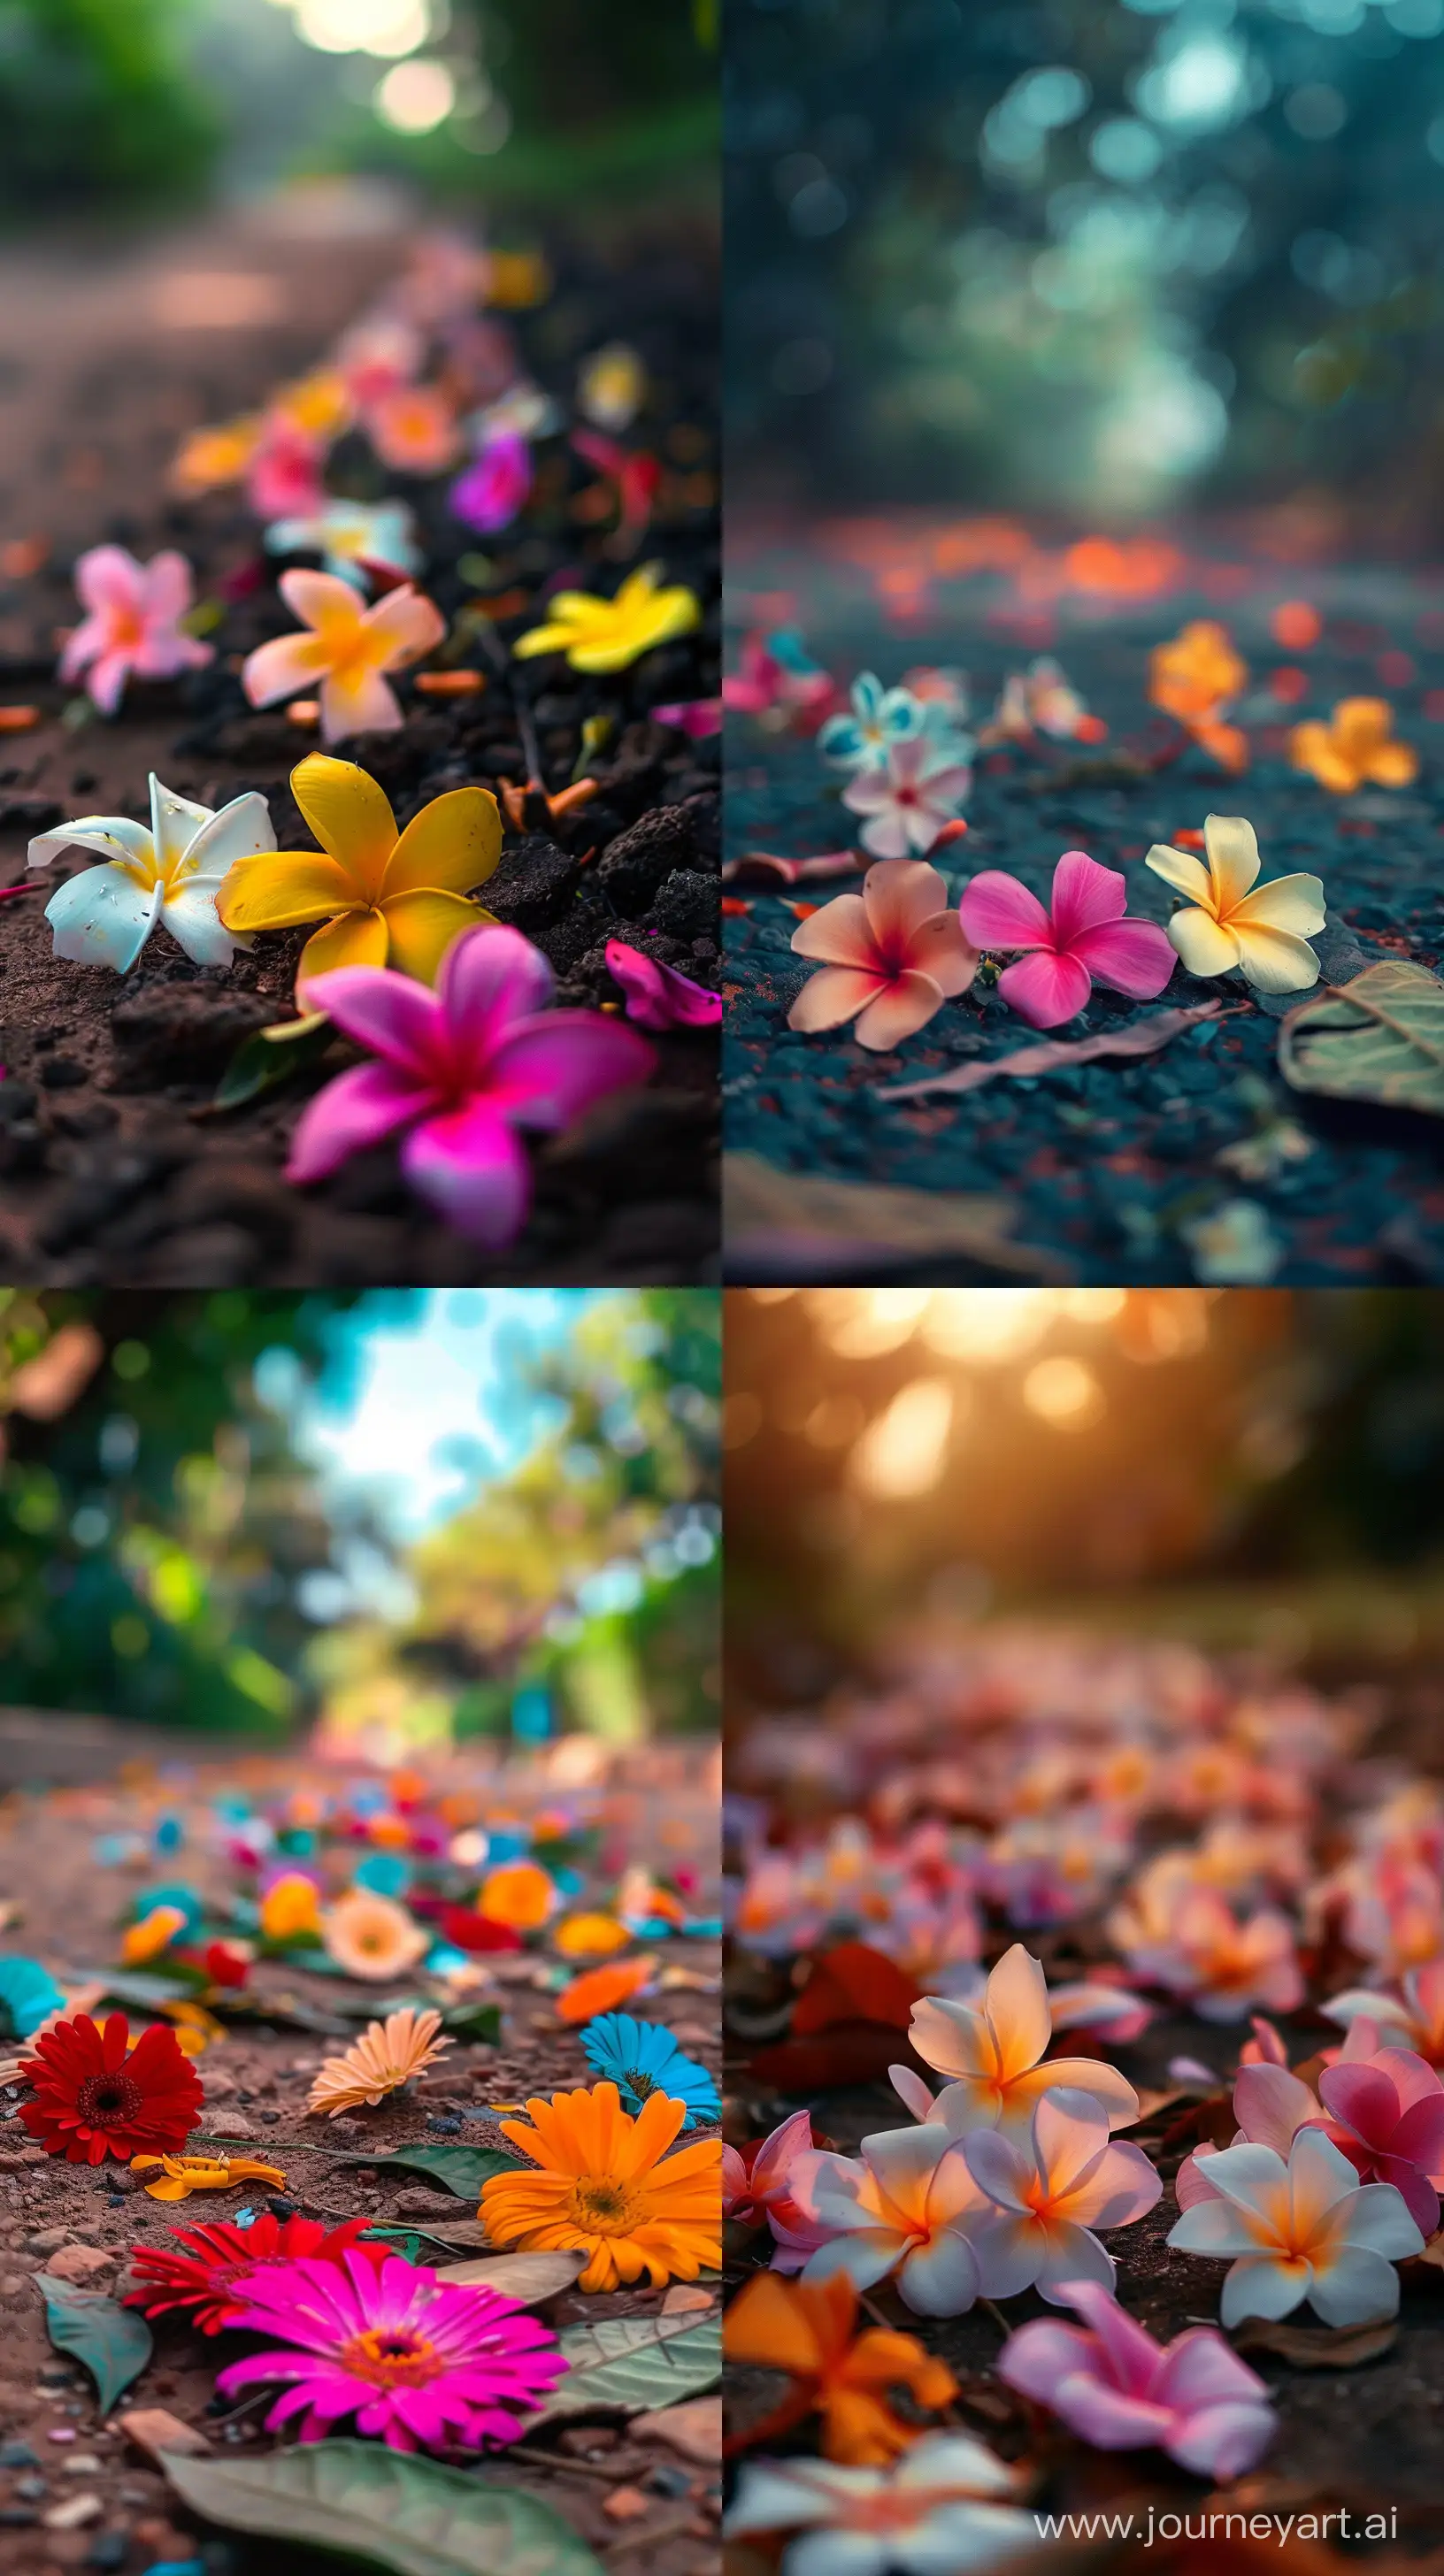 Vibrant-Parijat-Flowers-Blanketing-Serene-Grounds-in-HighResolution-8K-Imagery